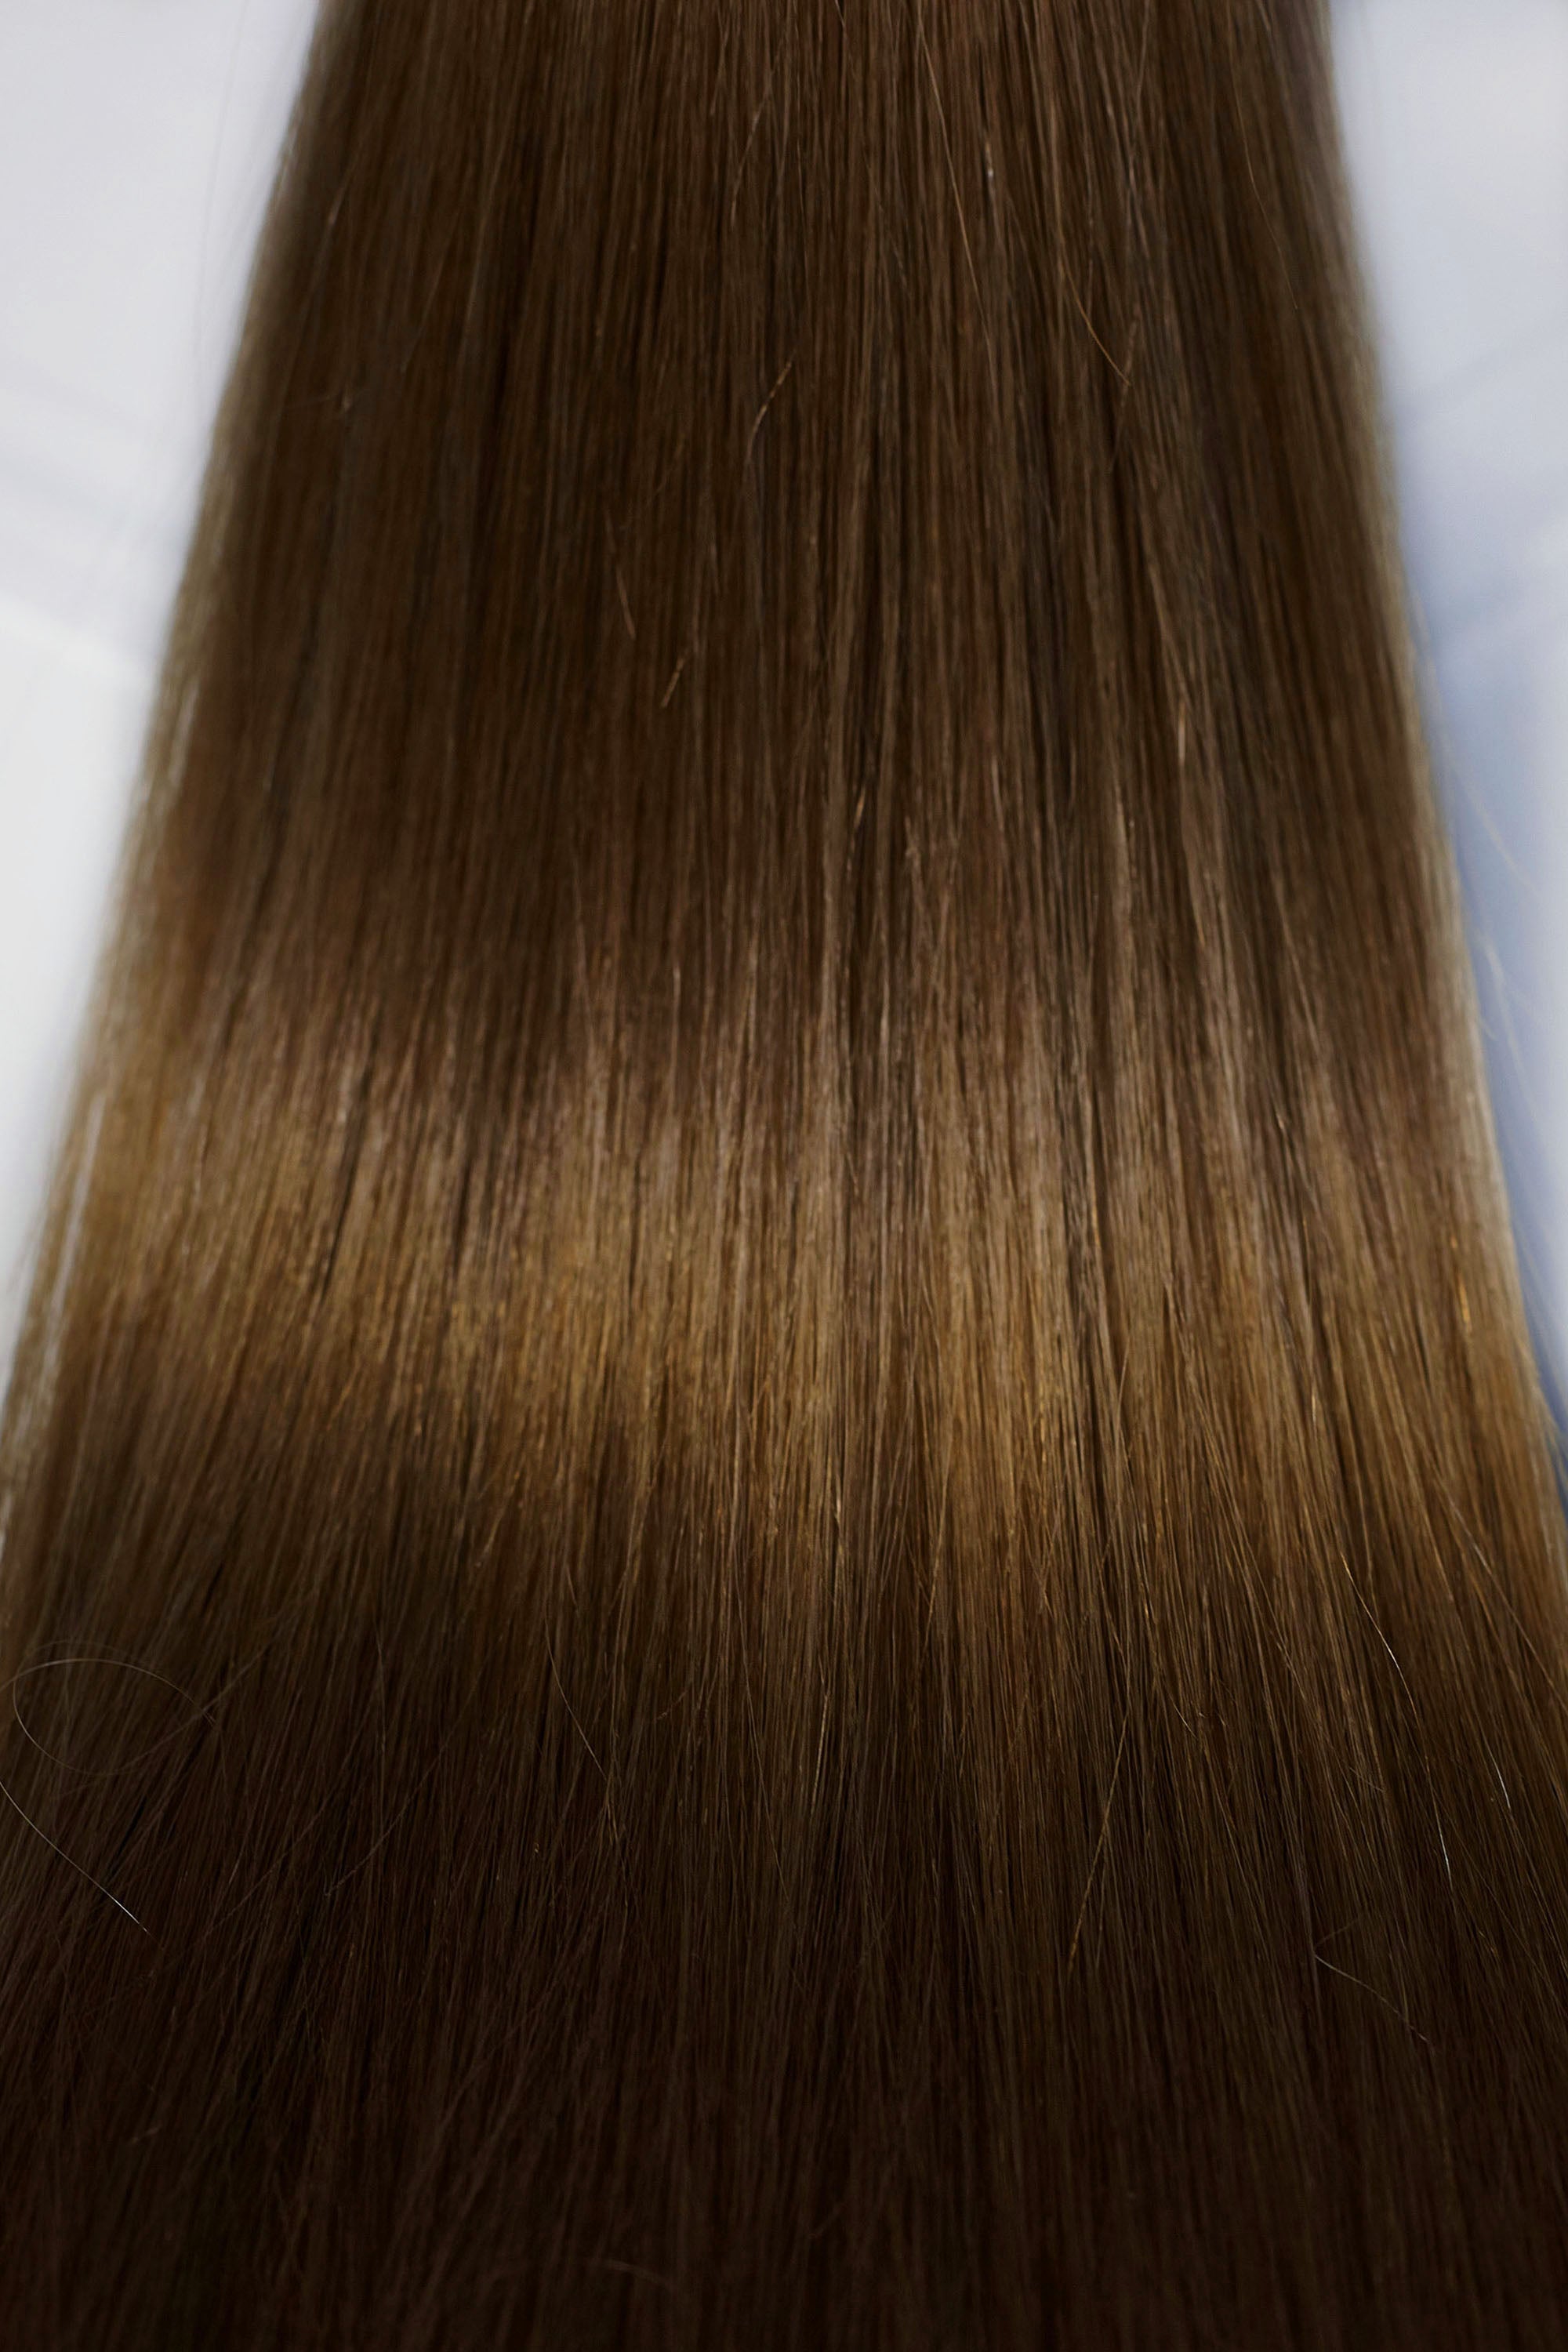 Behair professional Keratin Tip "Premium" 26" (65cm) Natural Straight Honey Walnut Brown #5 - 25g (Standart - 0.7g each pcs) hair extensions